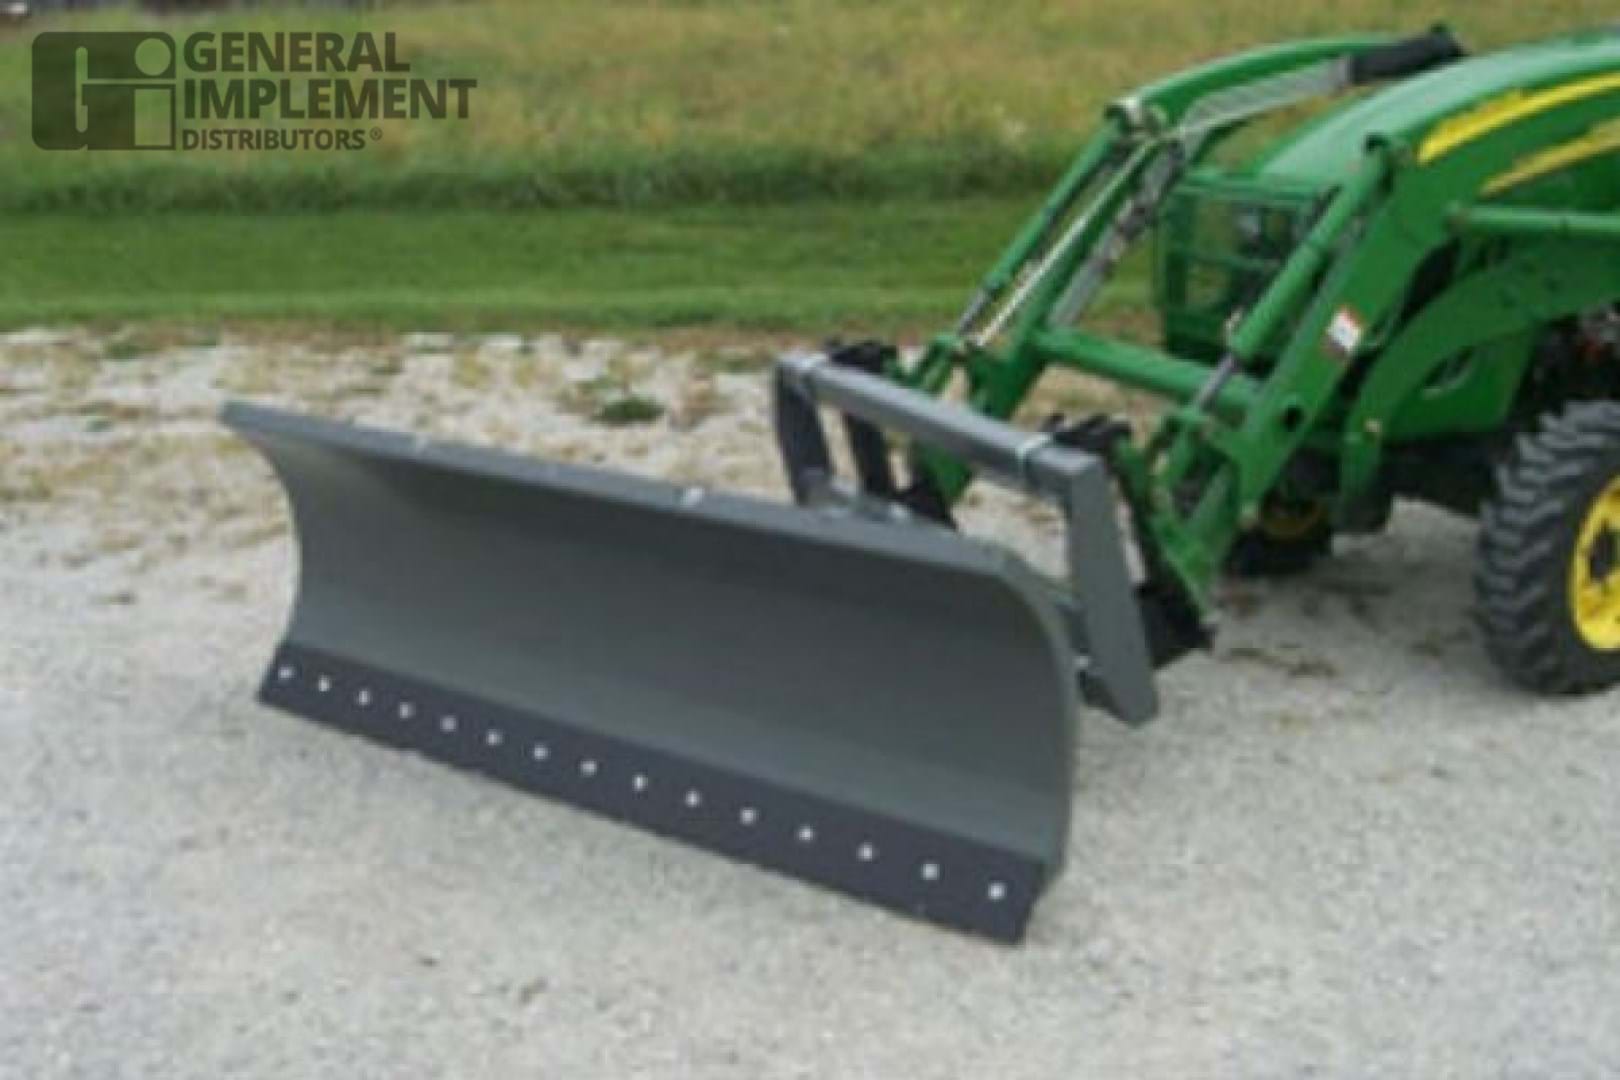 worksaver-90-plow-for-universal-skid-steer-mount-for-tractors-sbs-2790a_sbs-2790a_2021-12-15_92300.jpg